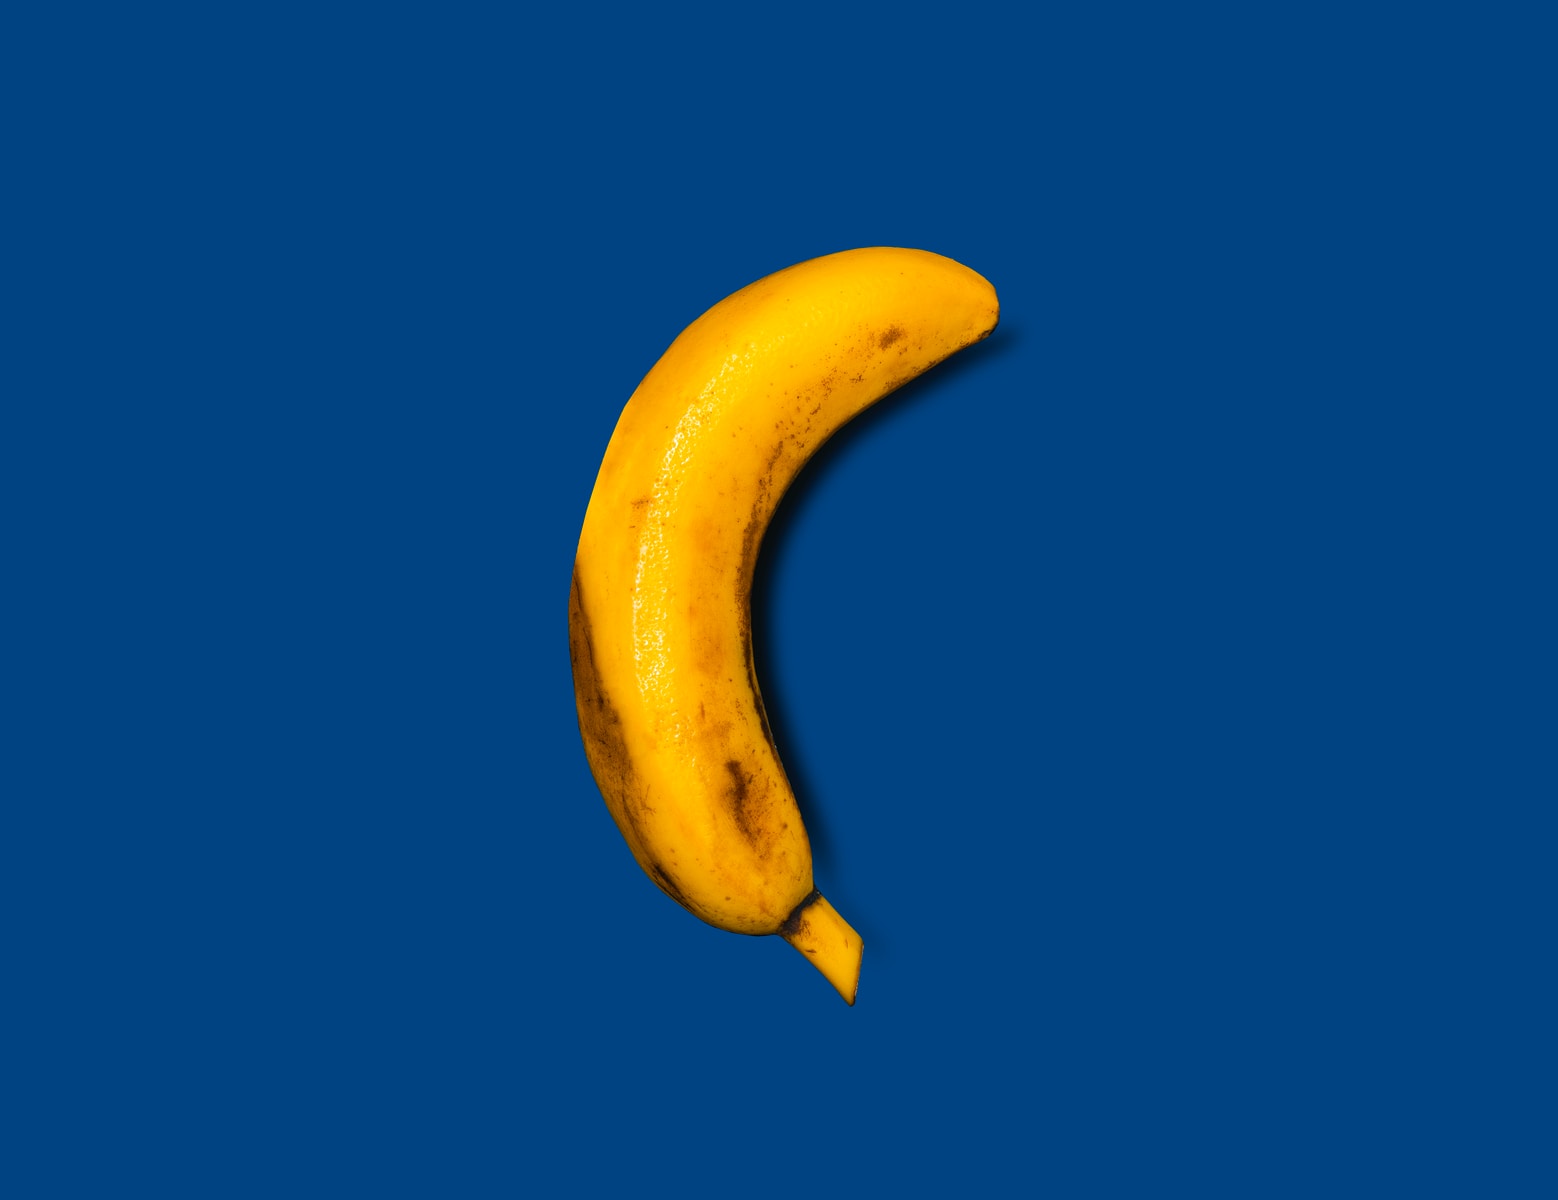 yellow banana on blue background